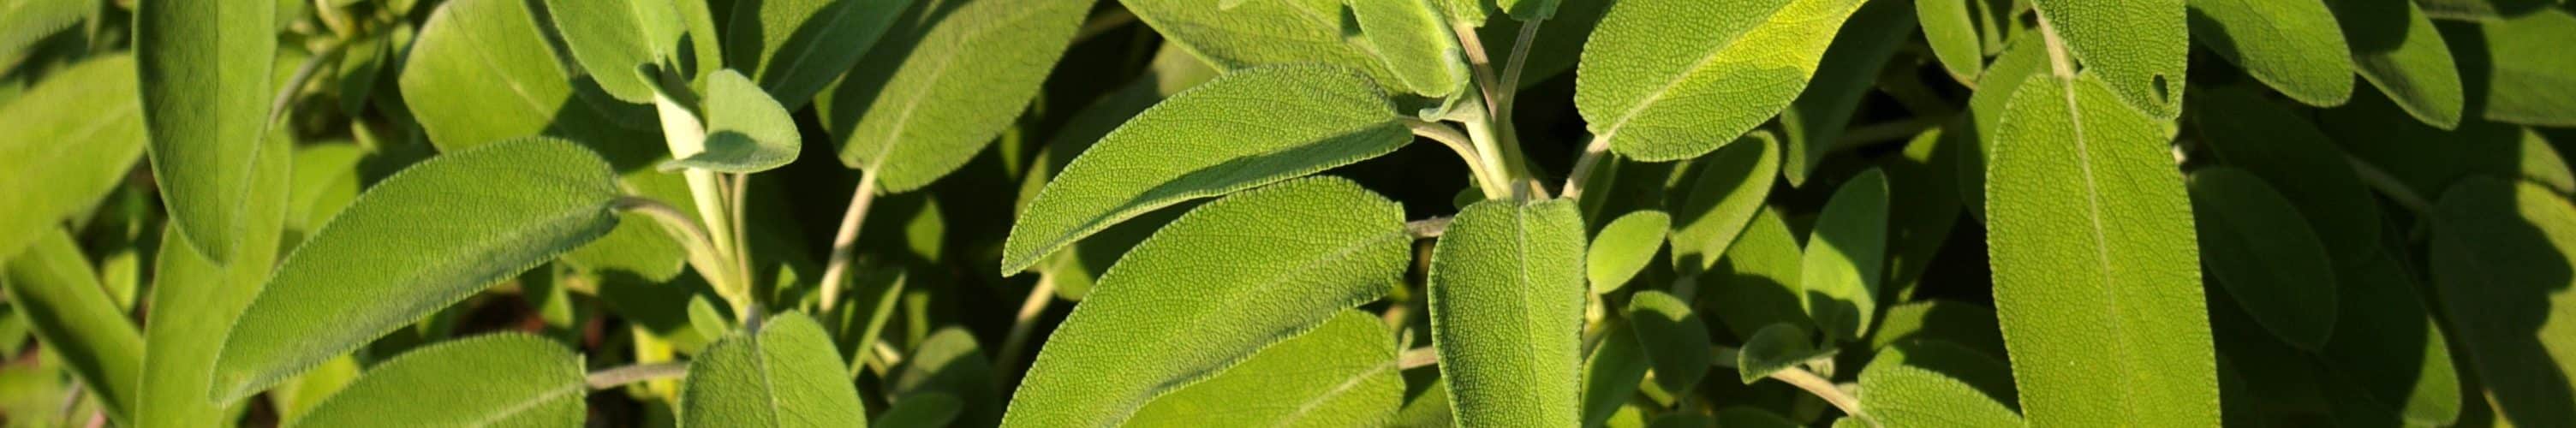 Salvia divinorum leaves